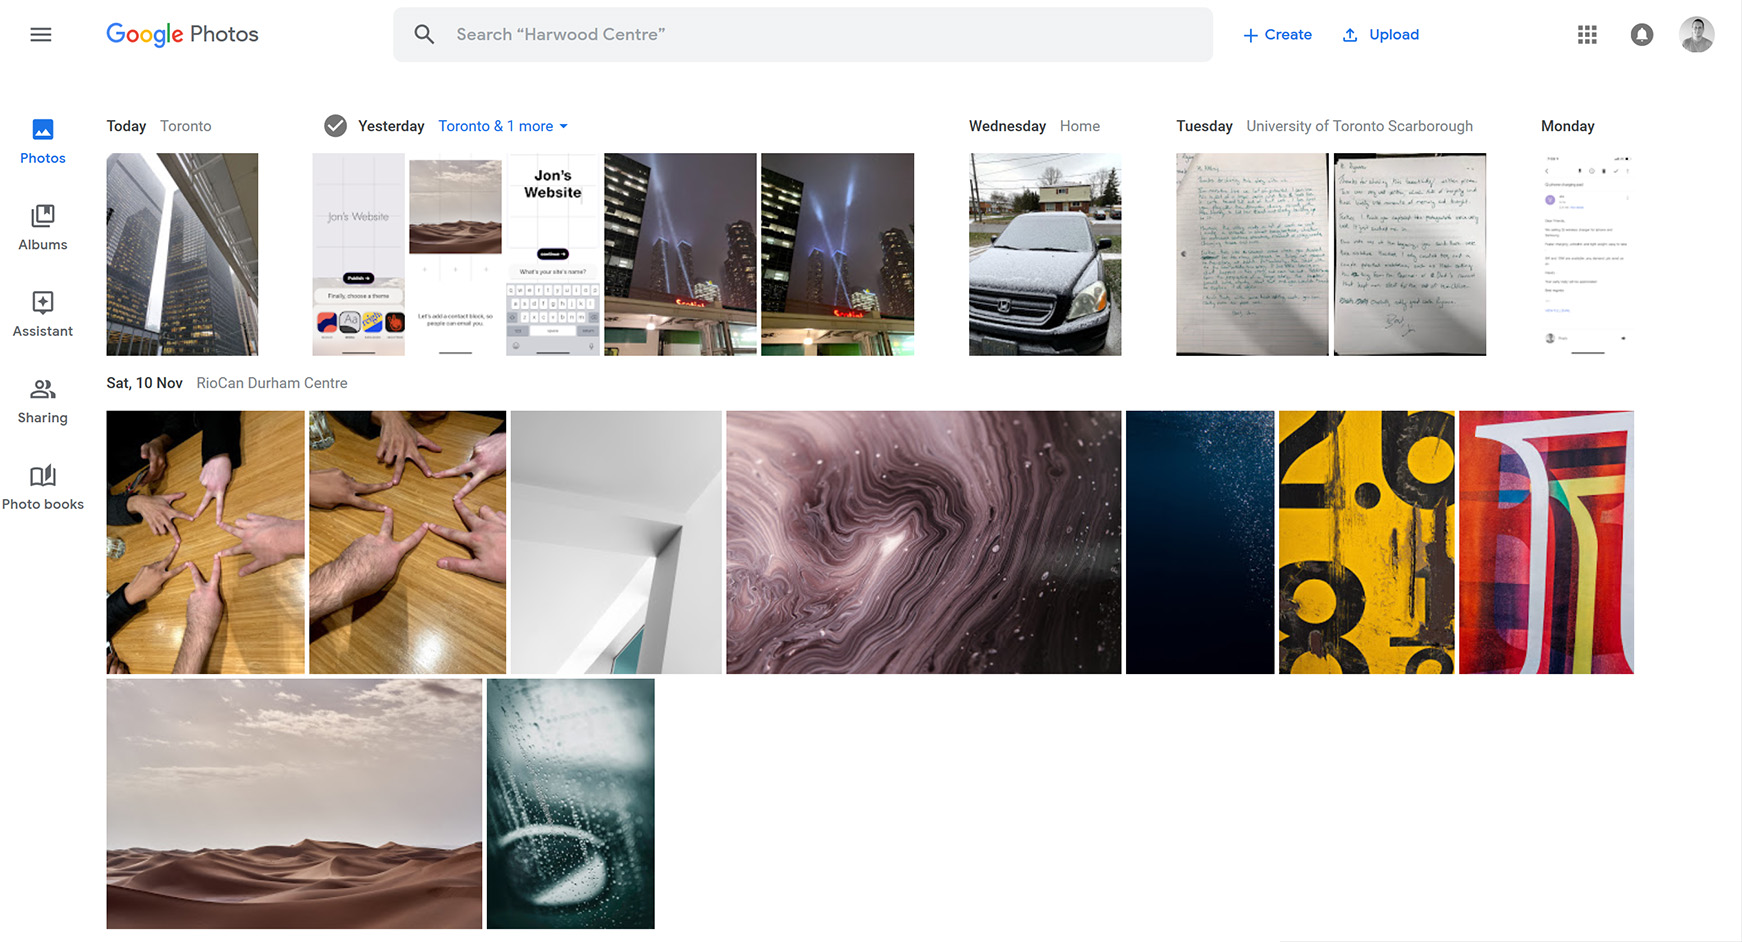 Google Photos website redesign